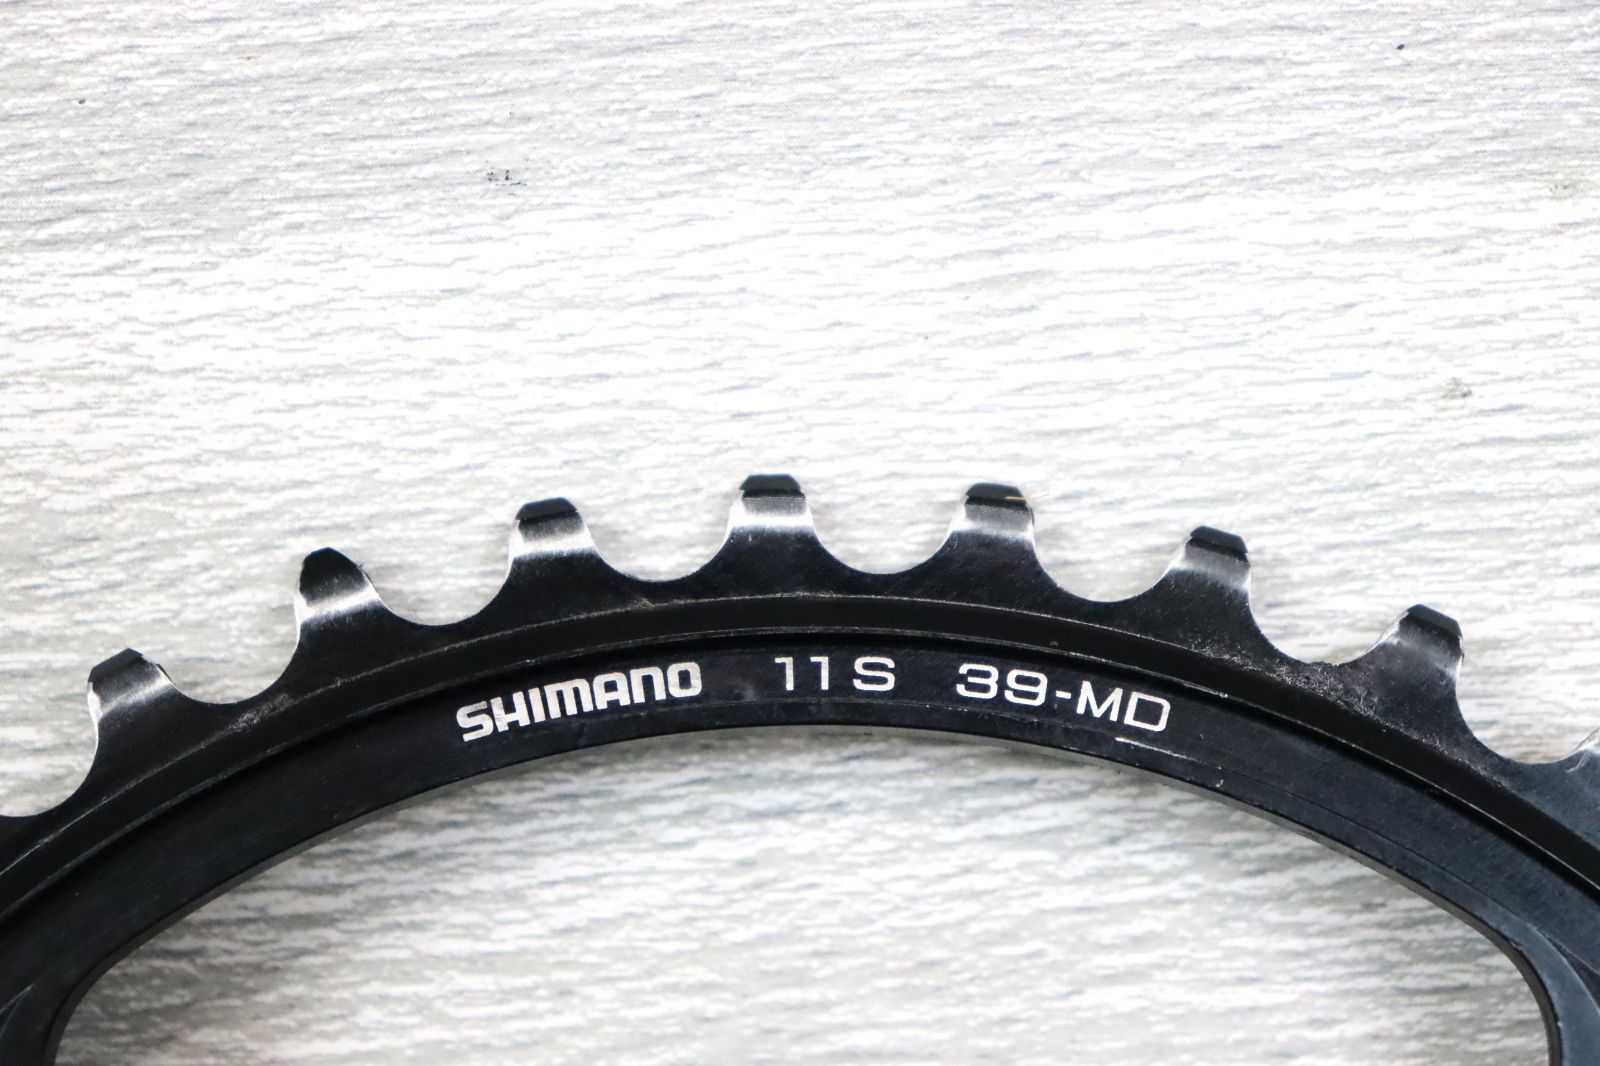 67 SHIMANO DURA-ACE シマノ デュラエース FC-9000 53-39 2×11速 11s 